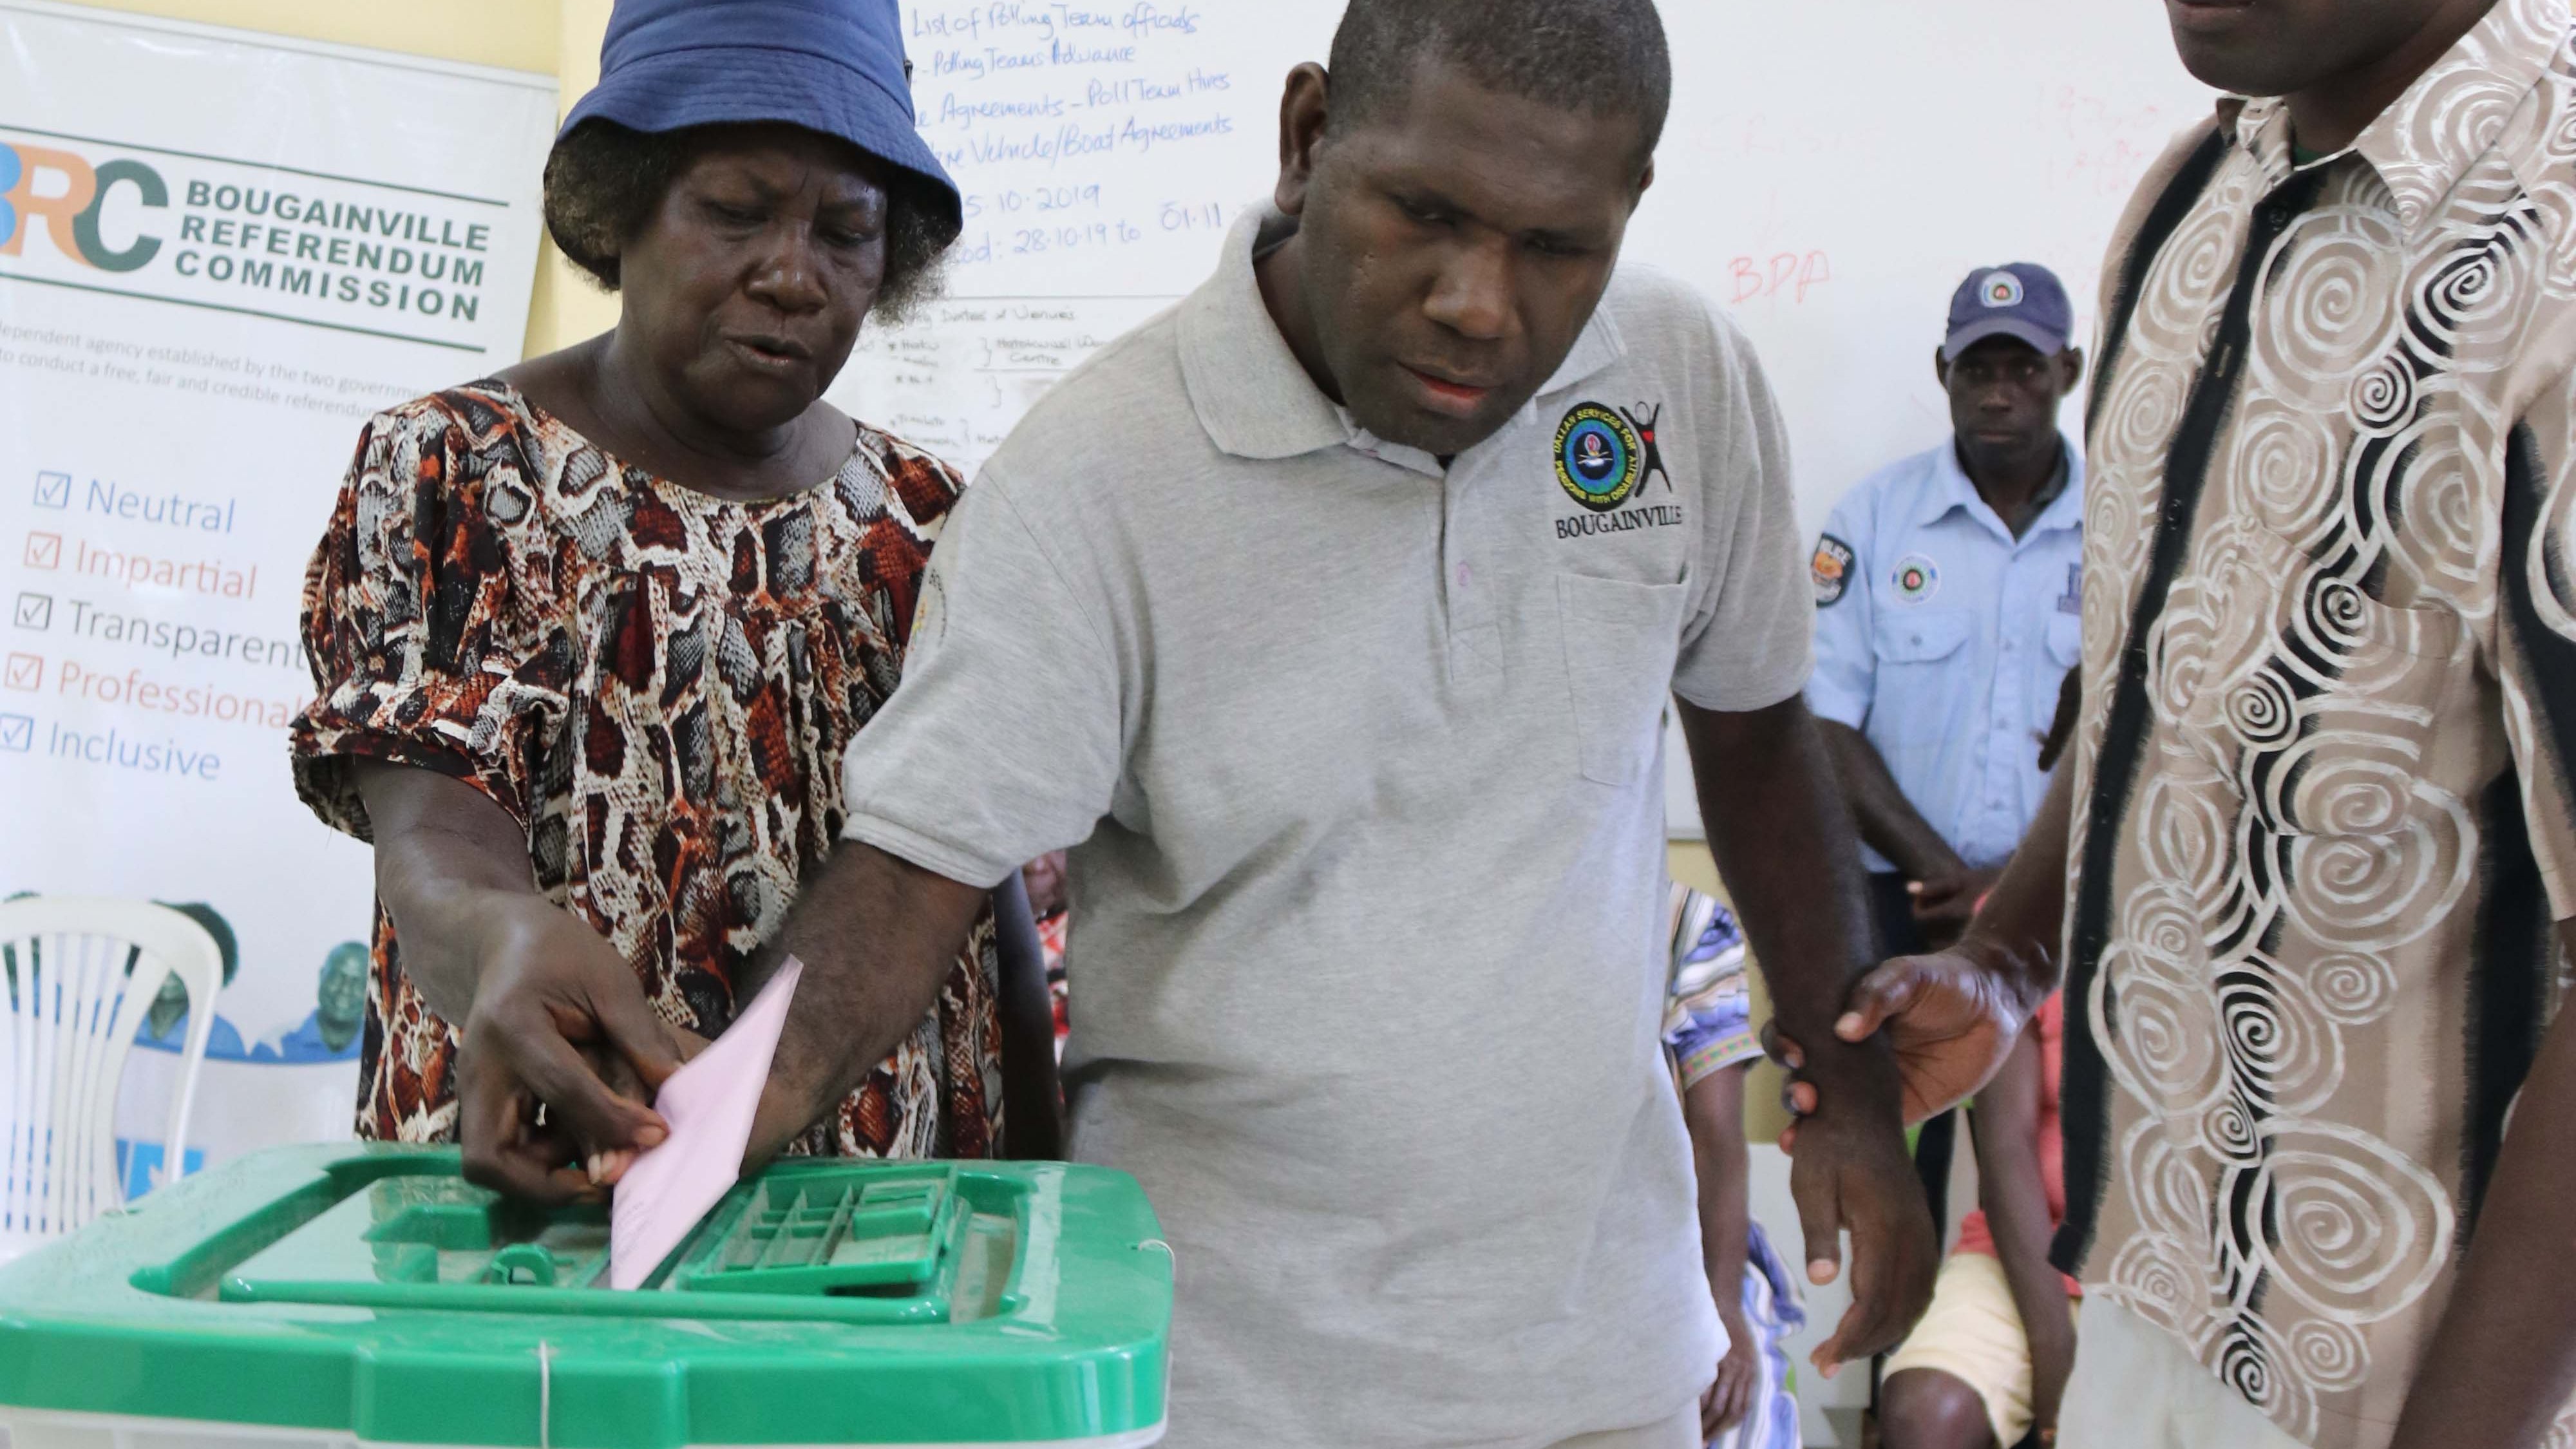 Aclaparadora victòria independentista al referèndum de Bougainville